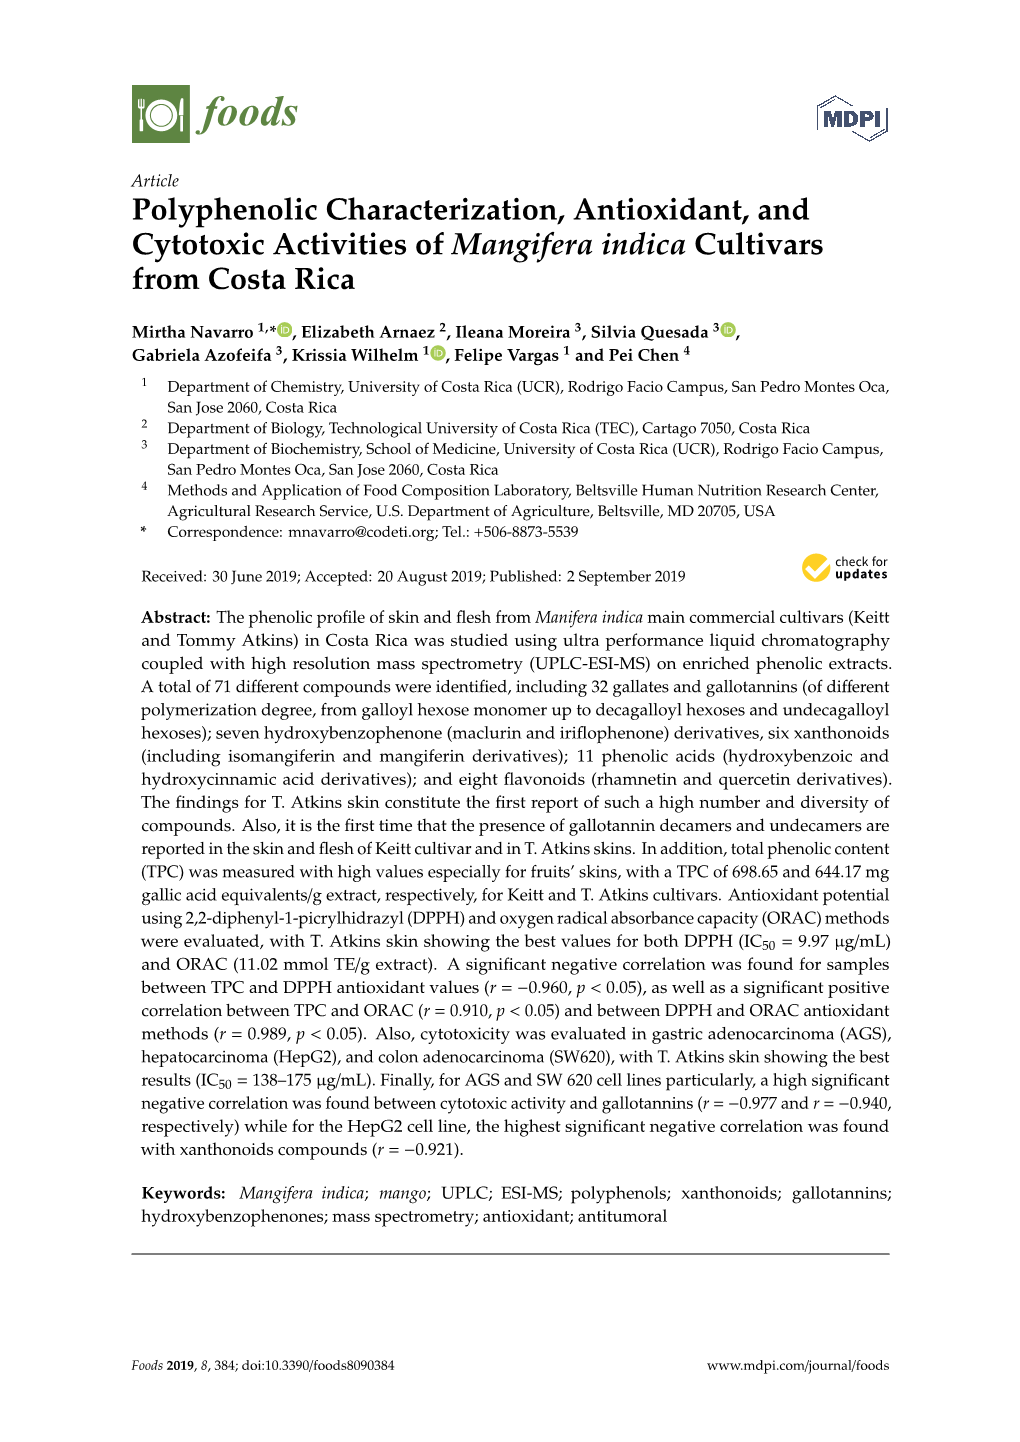 Polyphenolic Characterization, Antioxidant, and Cytotoxic Activities of Mangifera Indica Cultivars from Costa Rica